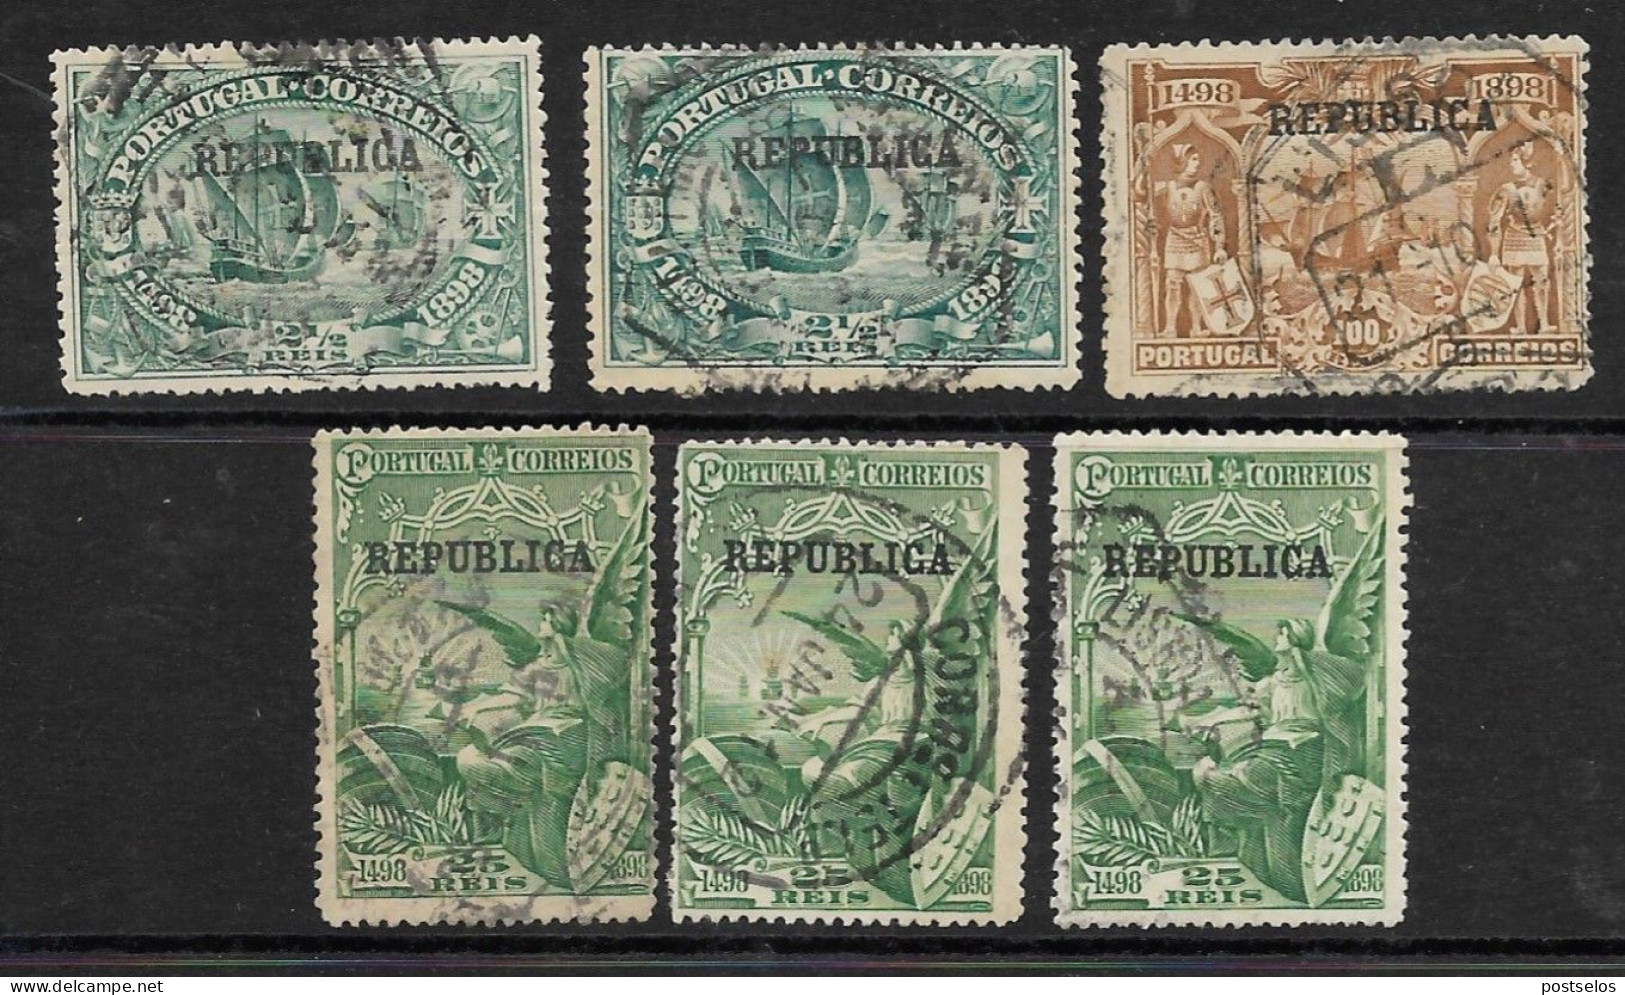 Caminho Marítimo India - Used Stamps